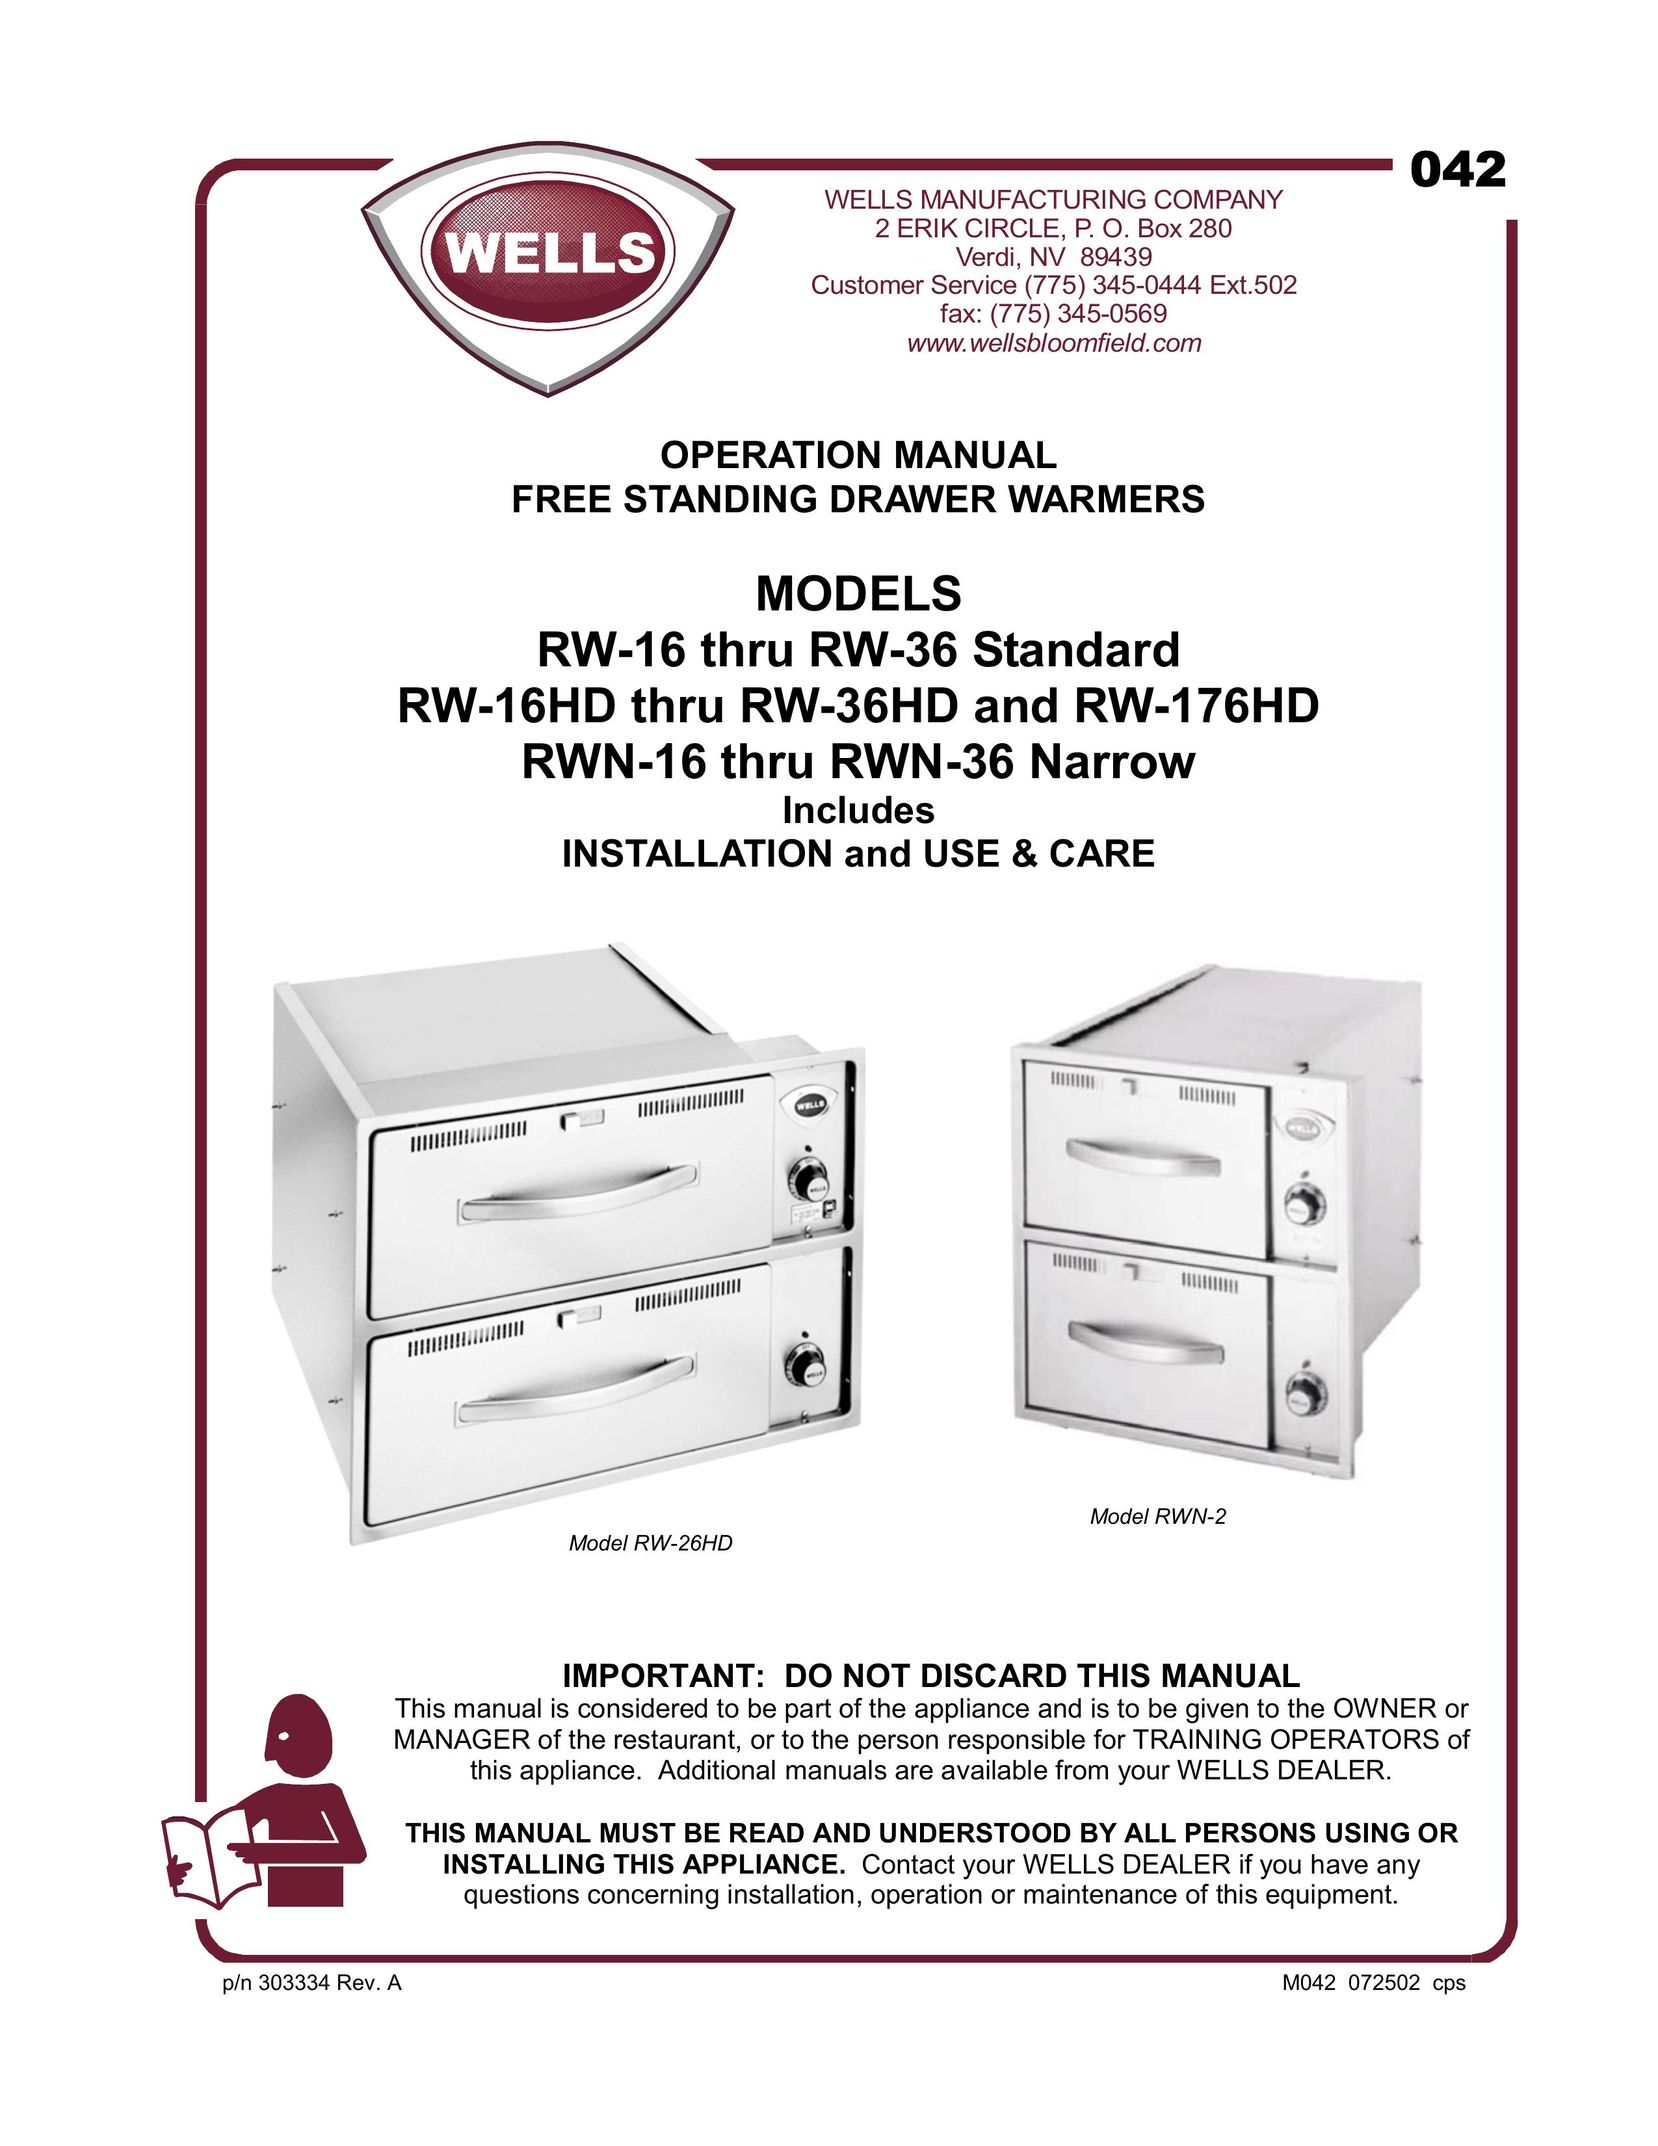 Wells RWN-2 Food Warmer User Manual